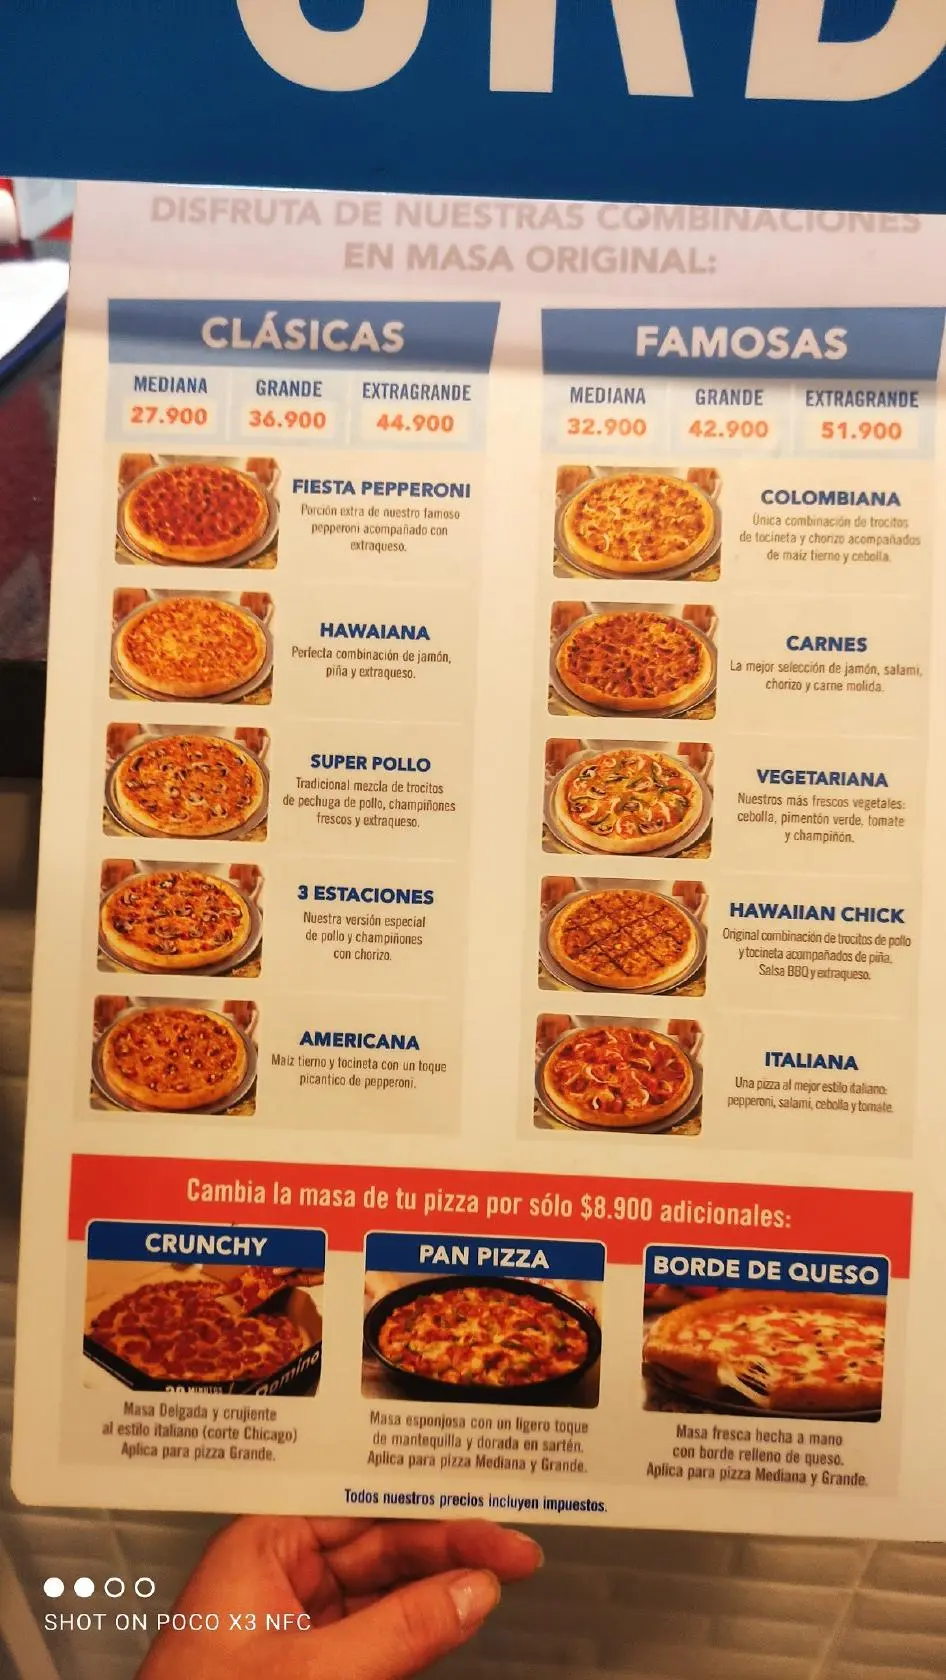 carta de domino's pizza colombia - Que trae la pizza colombiana de Domino's